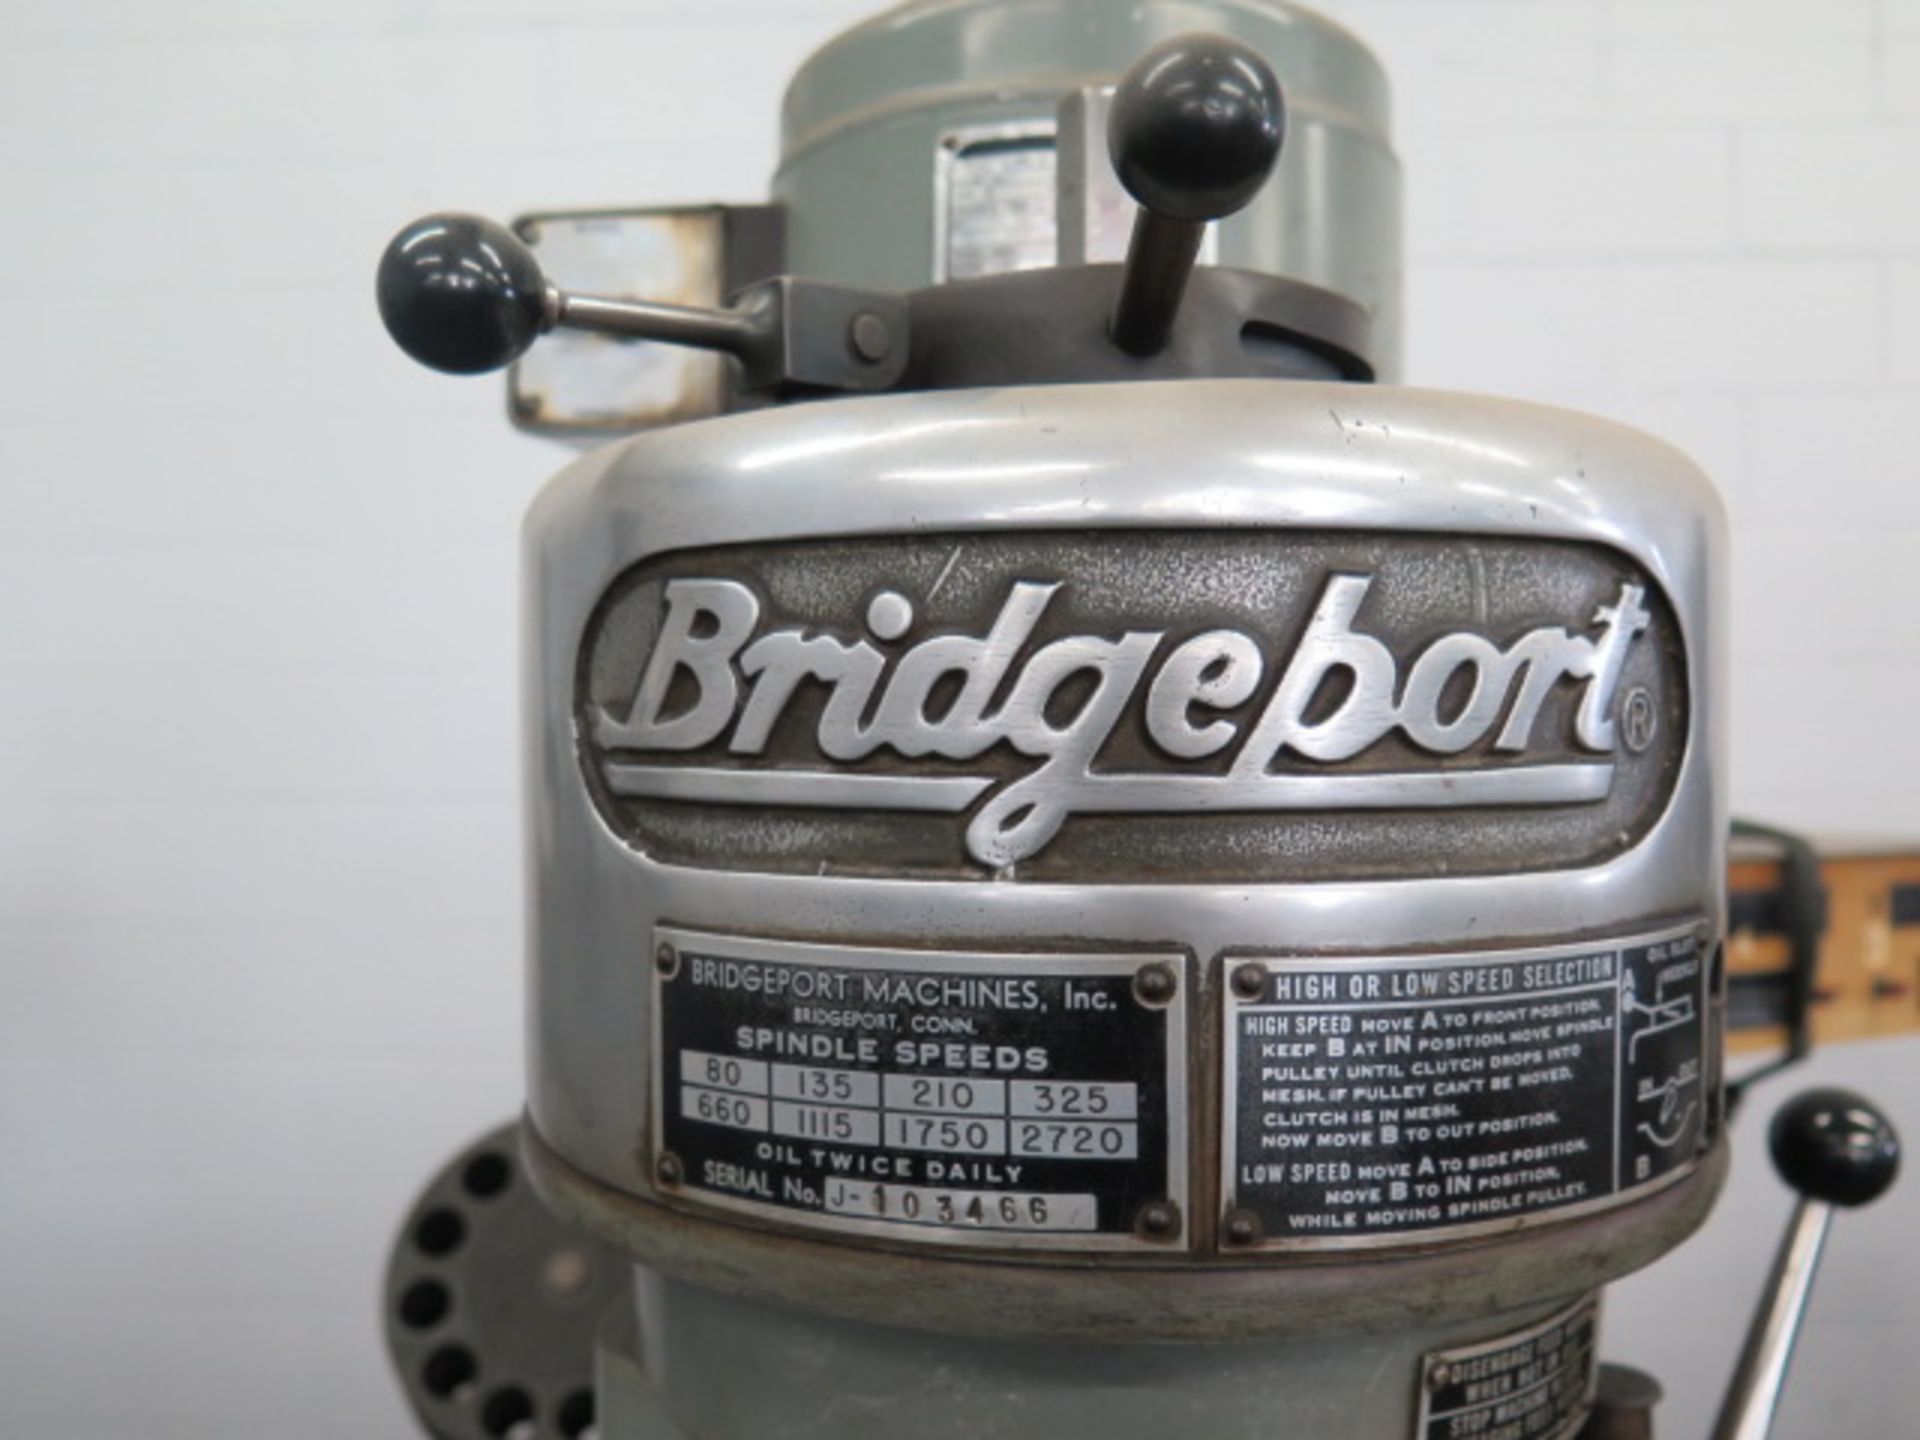 Bridgeport Vertical Mill s/n 88019 w/ Heidenhain DRO, 1Hp Motor, 80-2720 RPM, 8-Speeds, SOLD AS IS - Image 13 of 13